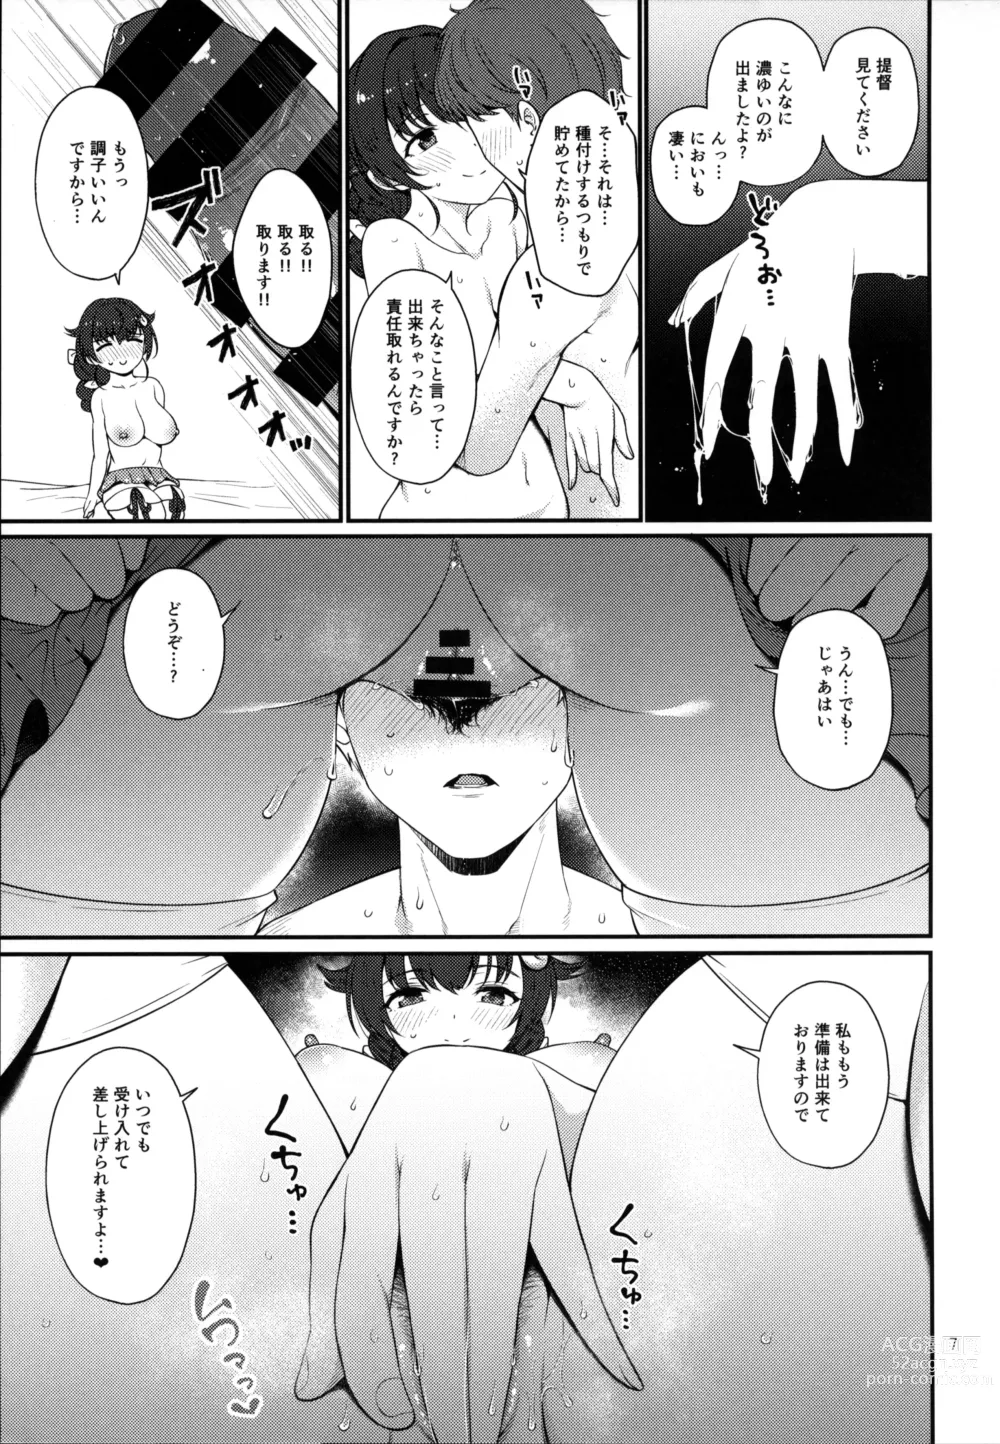 Page 6 of doujinshi Yoru no Jingei